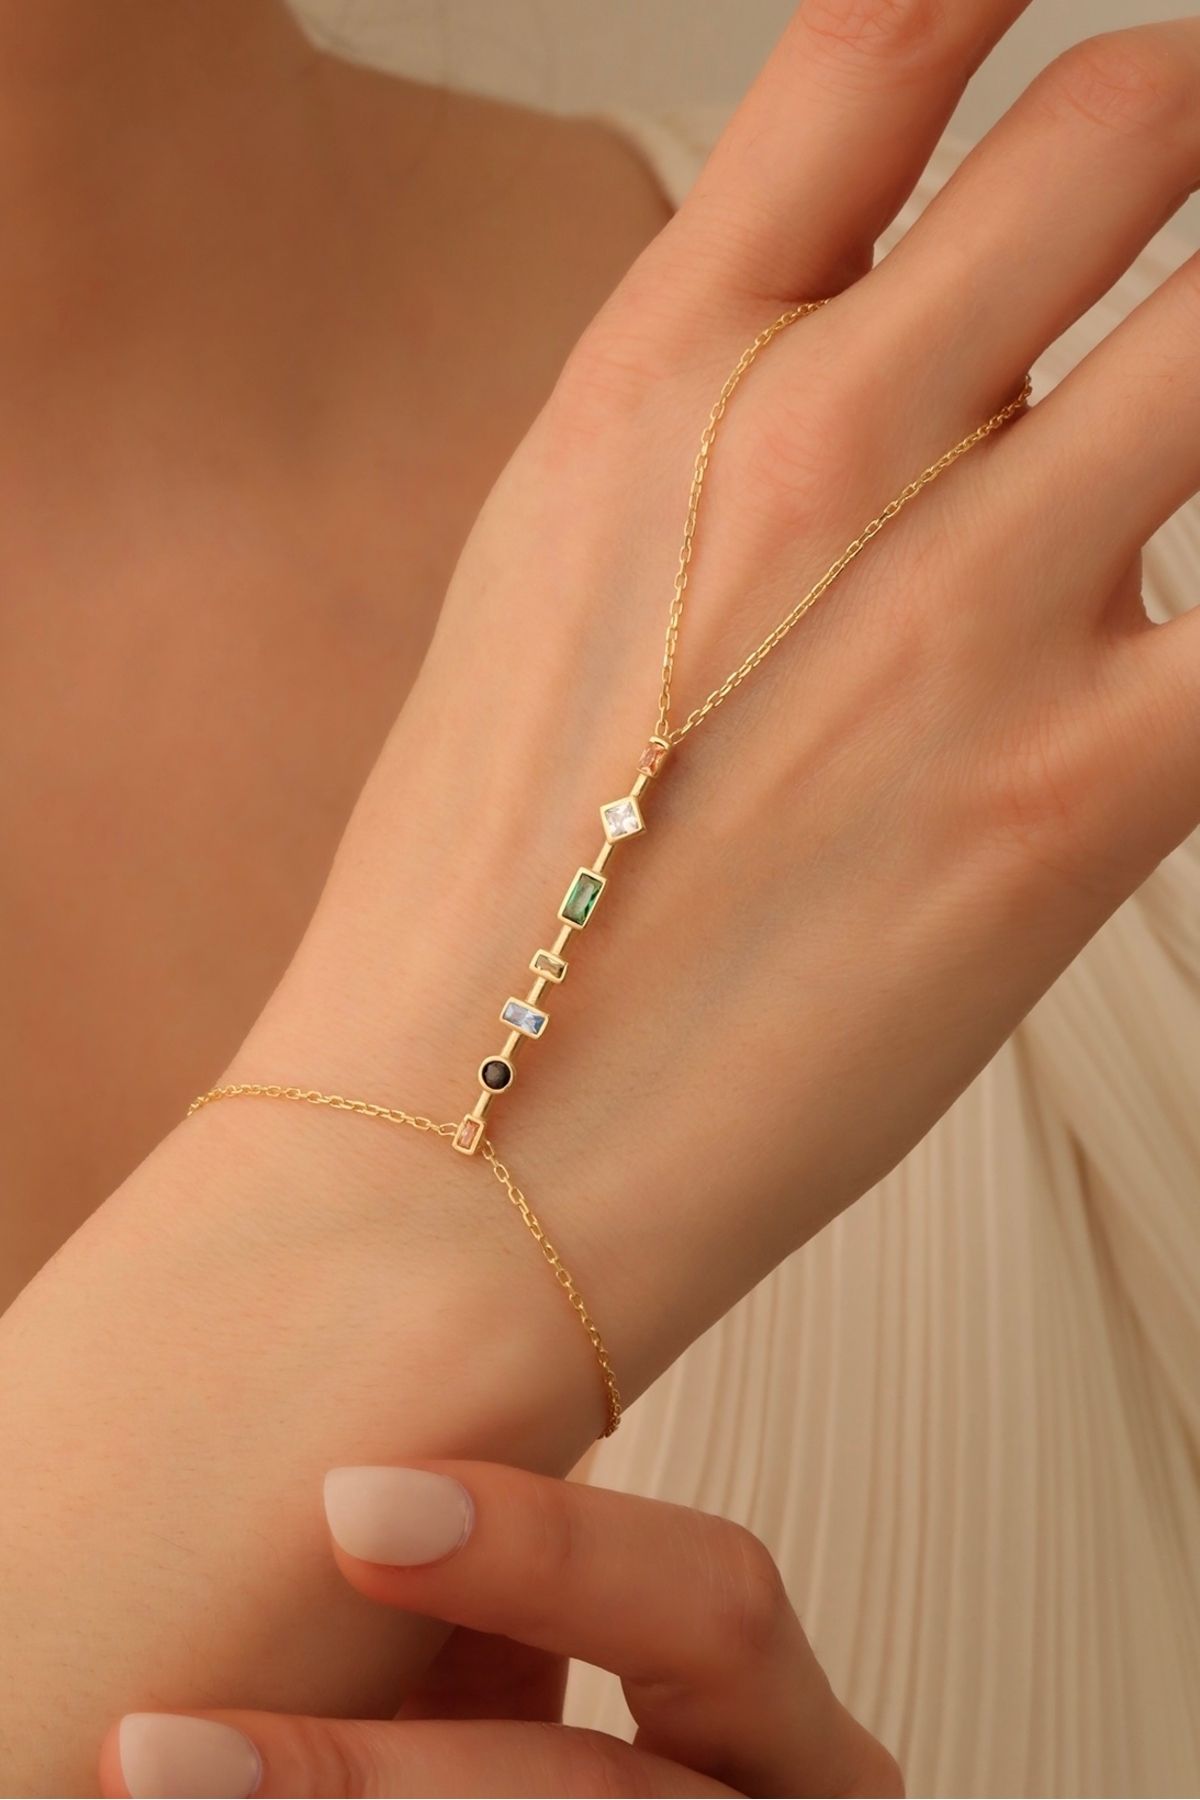 emy by emel luxury silver jewelry Altın Kaplama Renkli Taşlı Mix Şahmeran 925 Ayar Gümüş